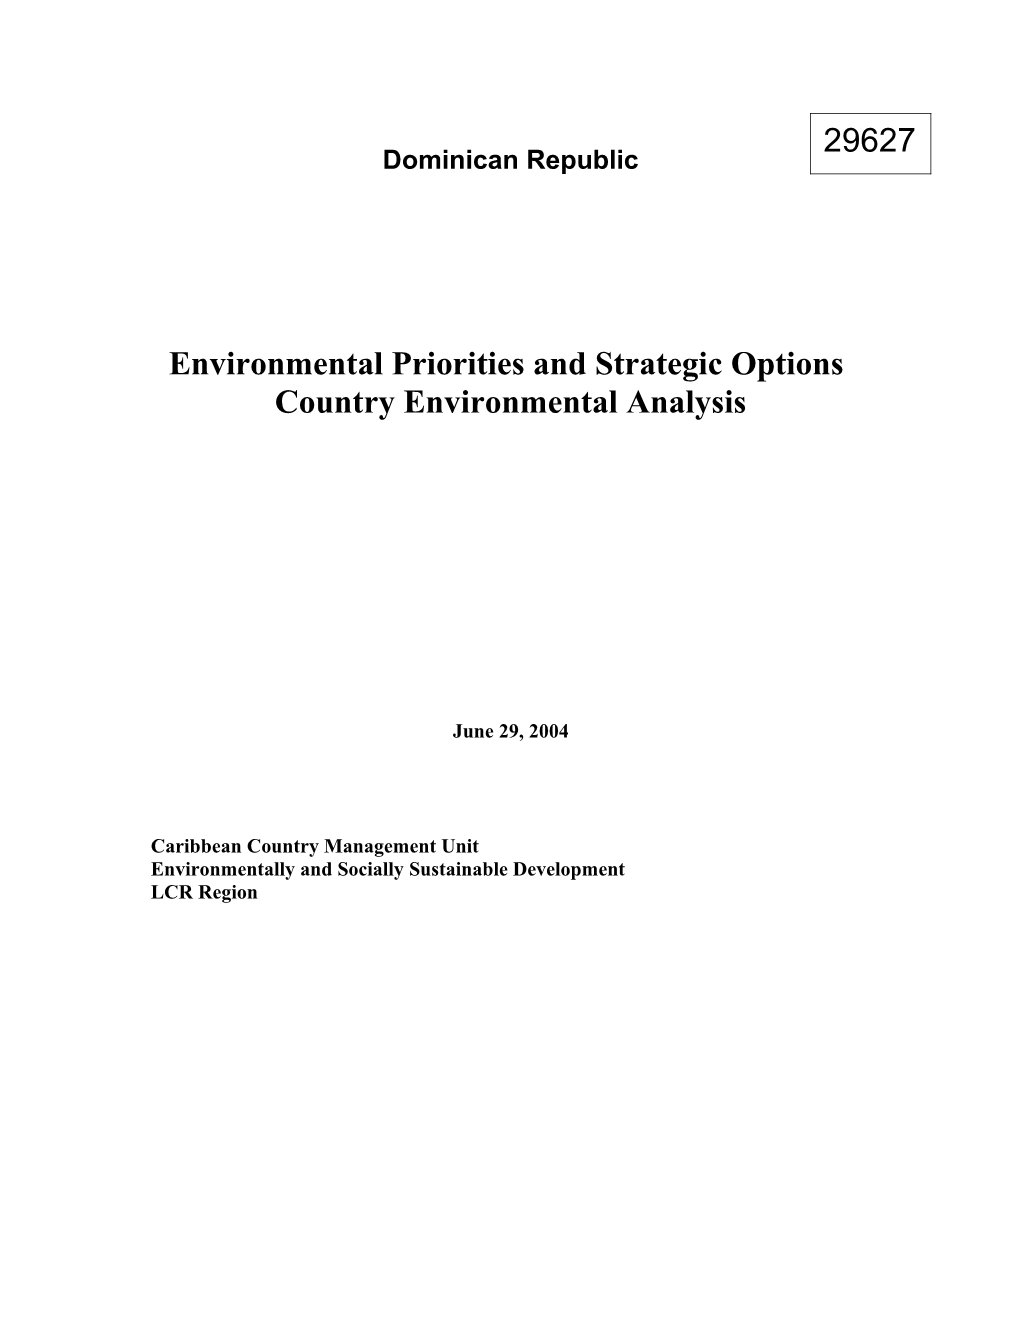 Environmental Priorities and Strategic Options